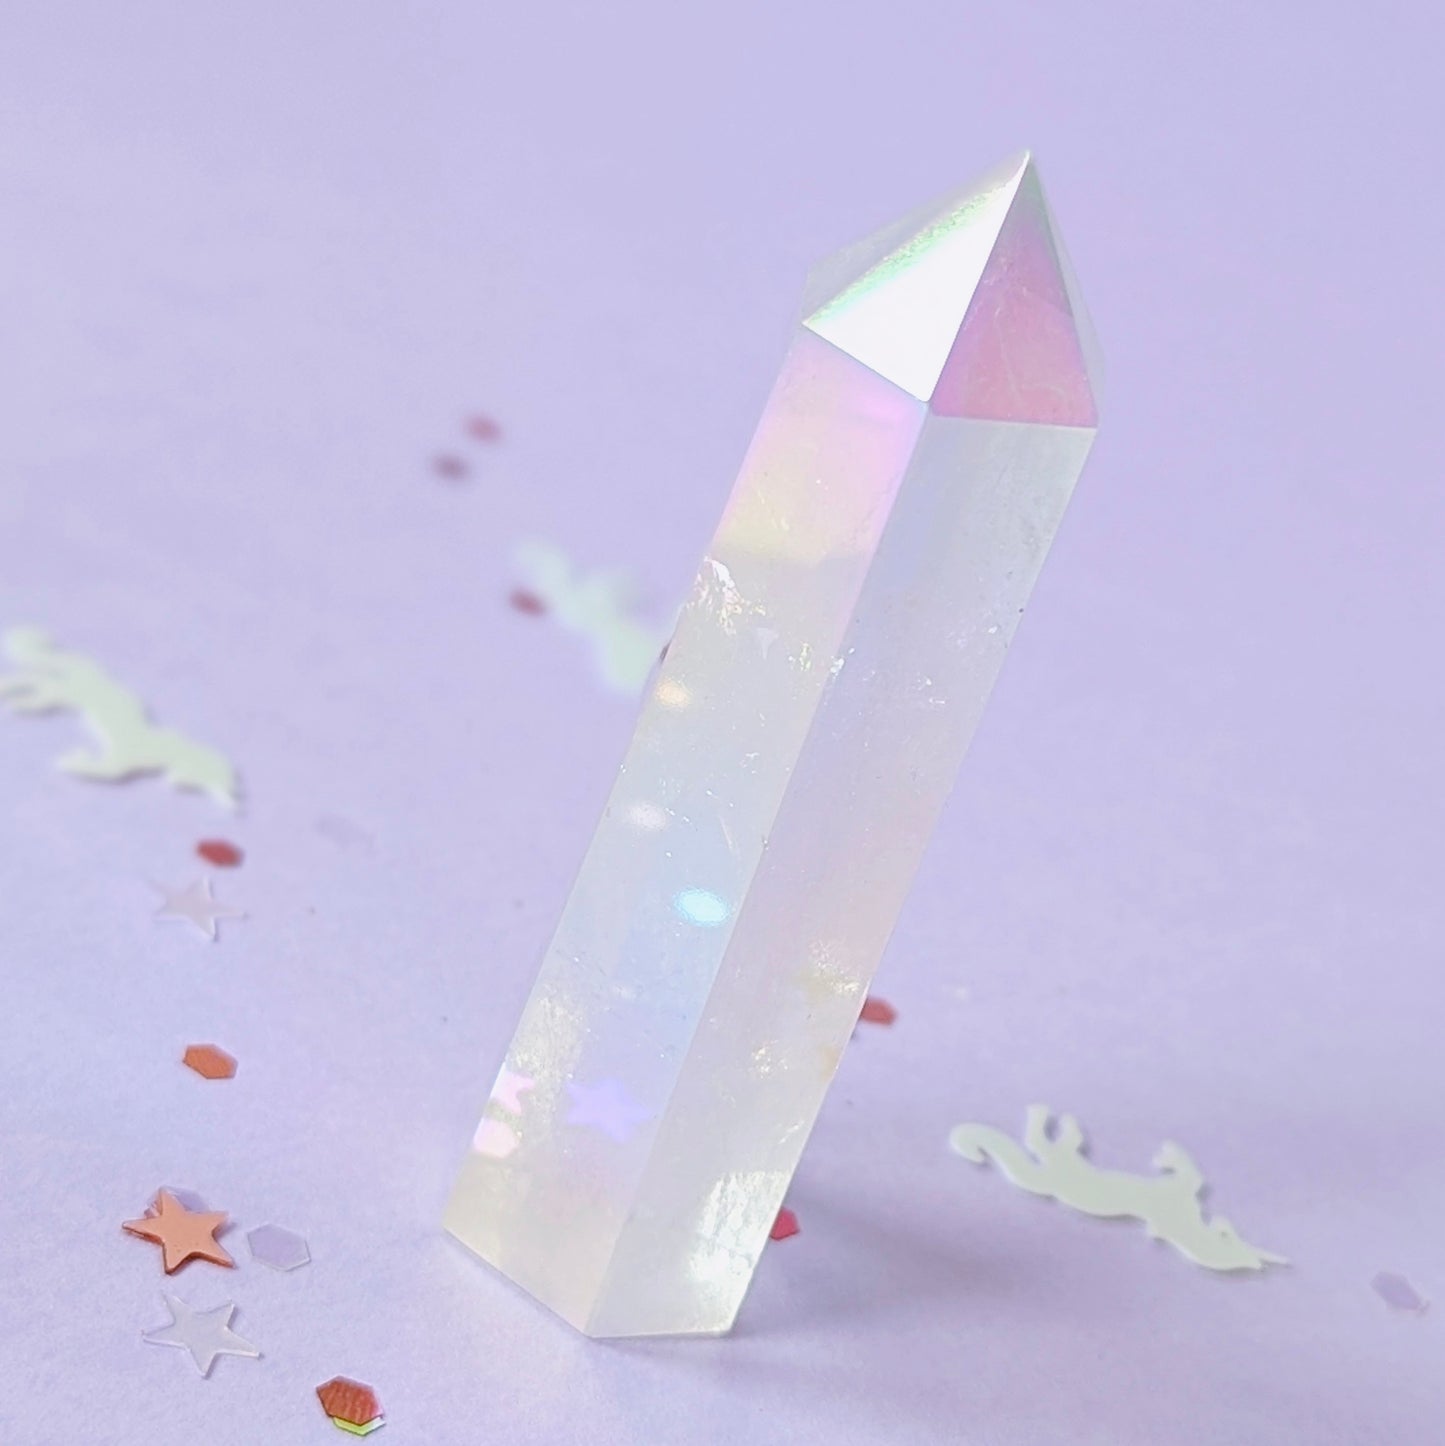 Cristaux : Aura clear quartz